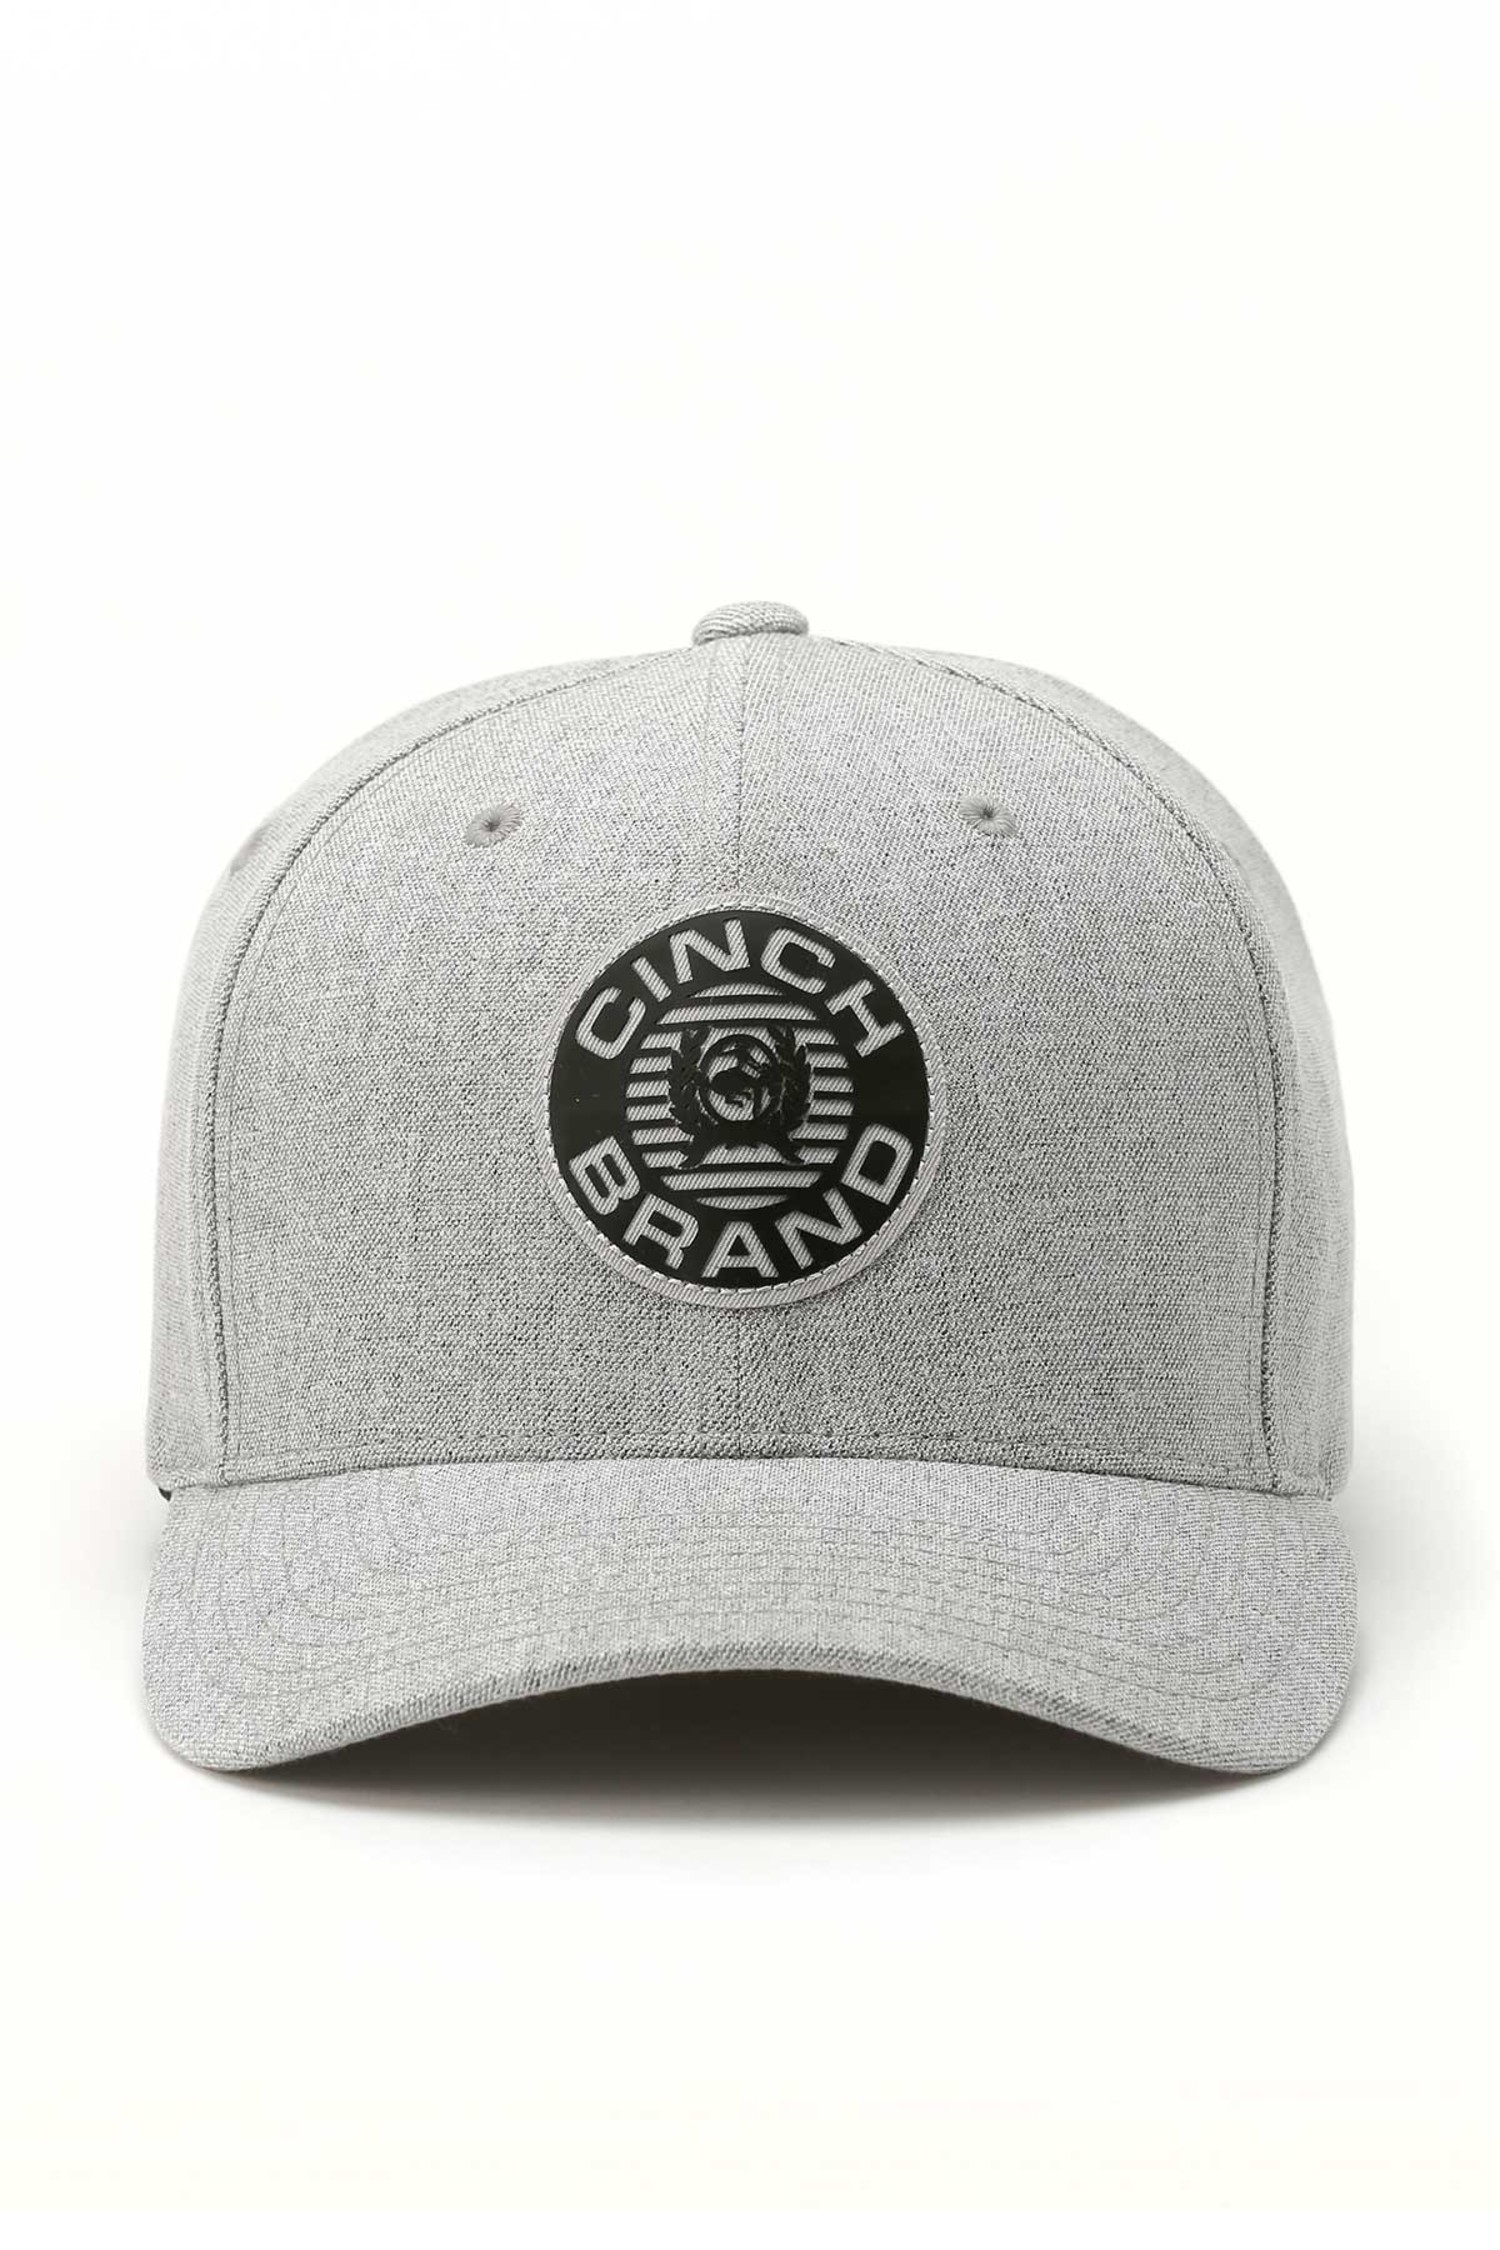 Brand Grey Flexfit Heather - Western Frontier Cinch Cinch Cap Shop